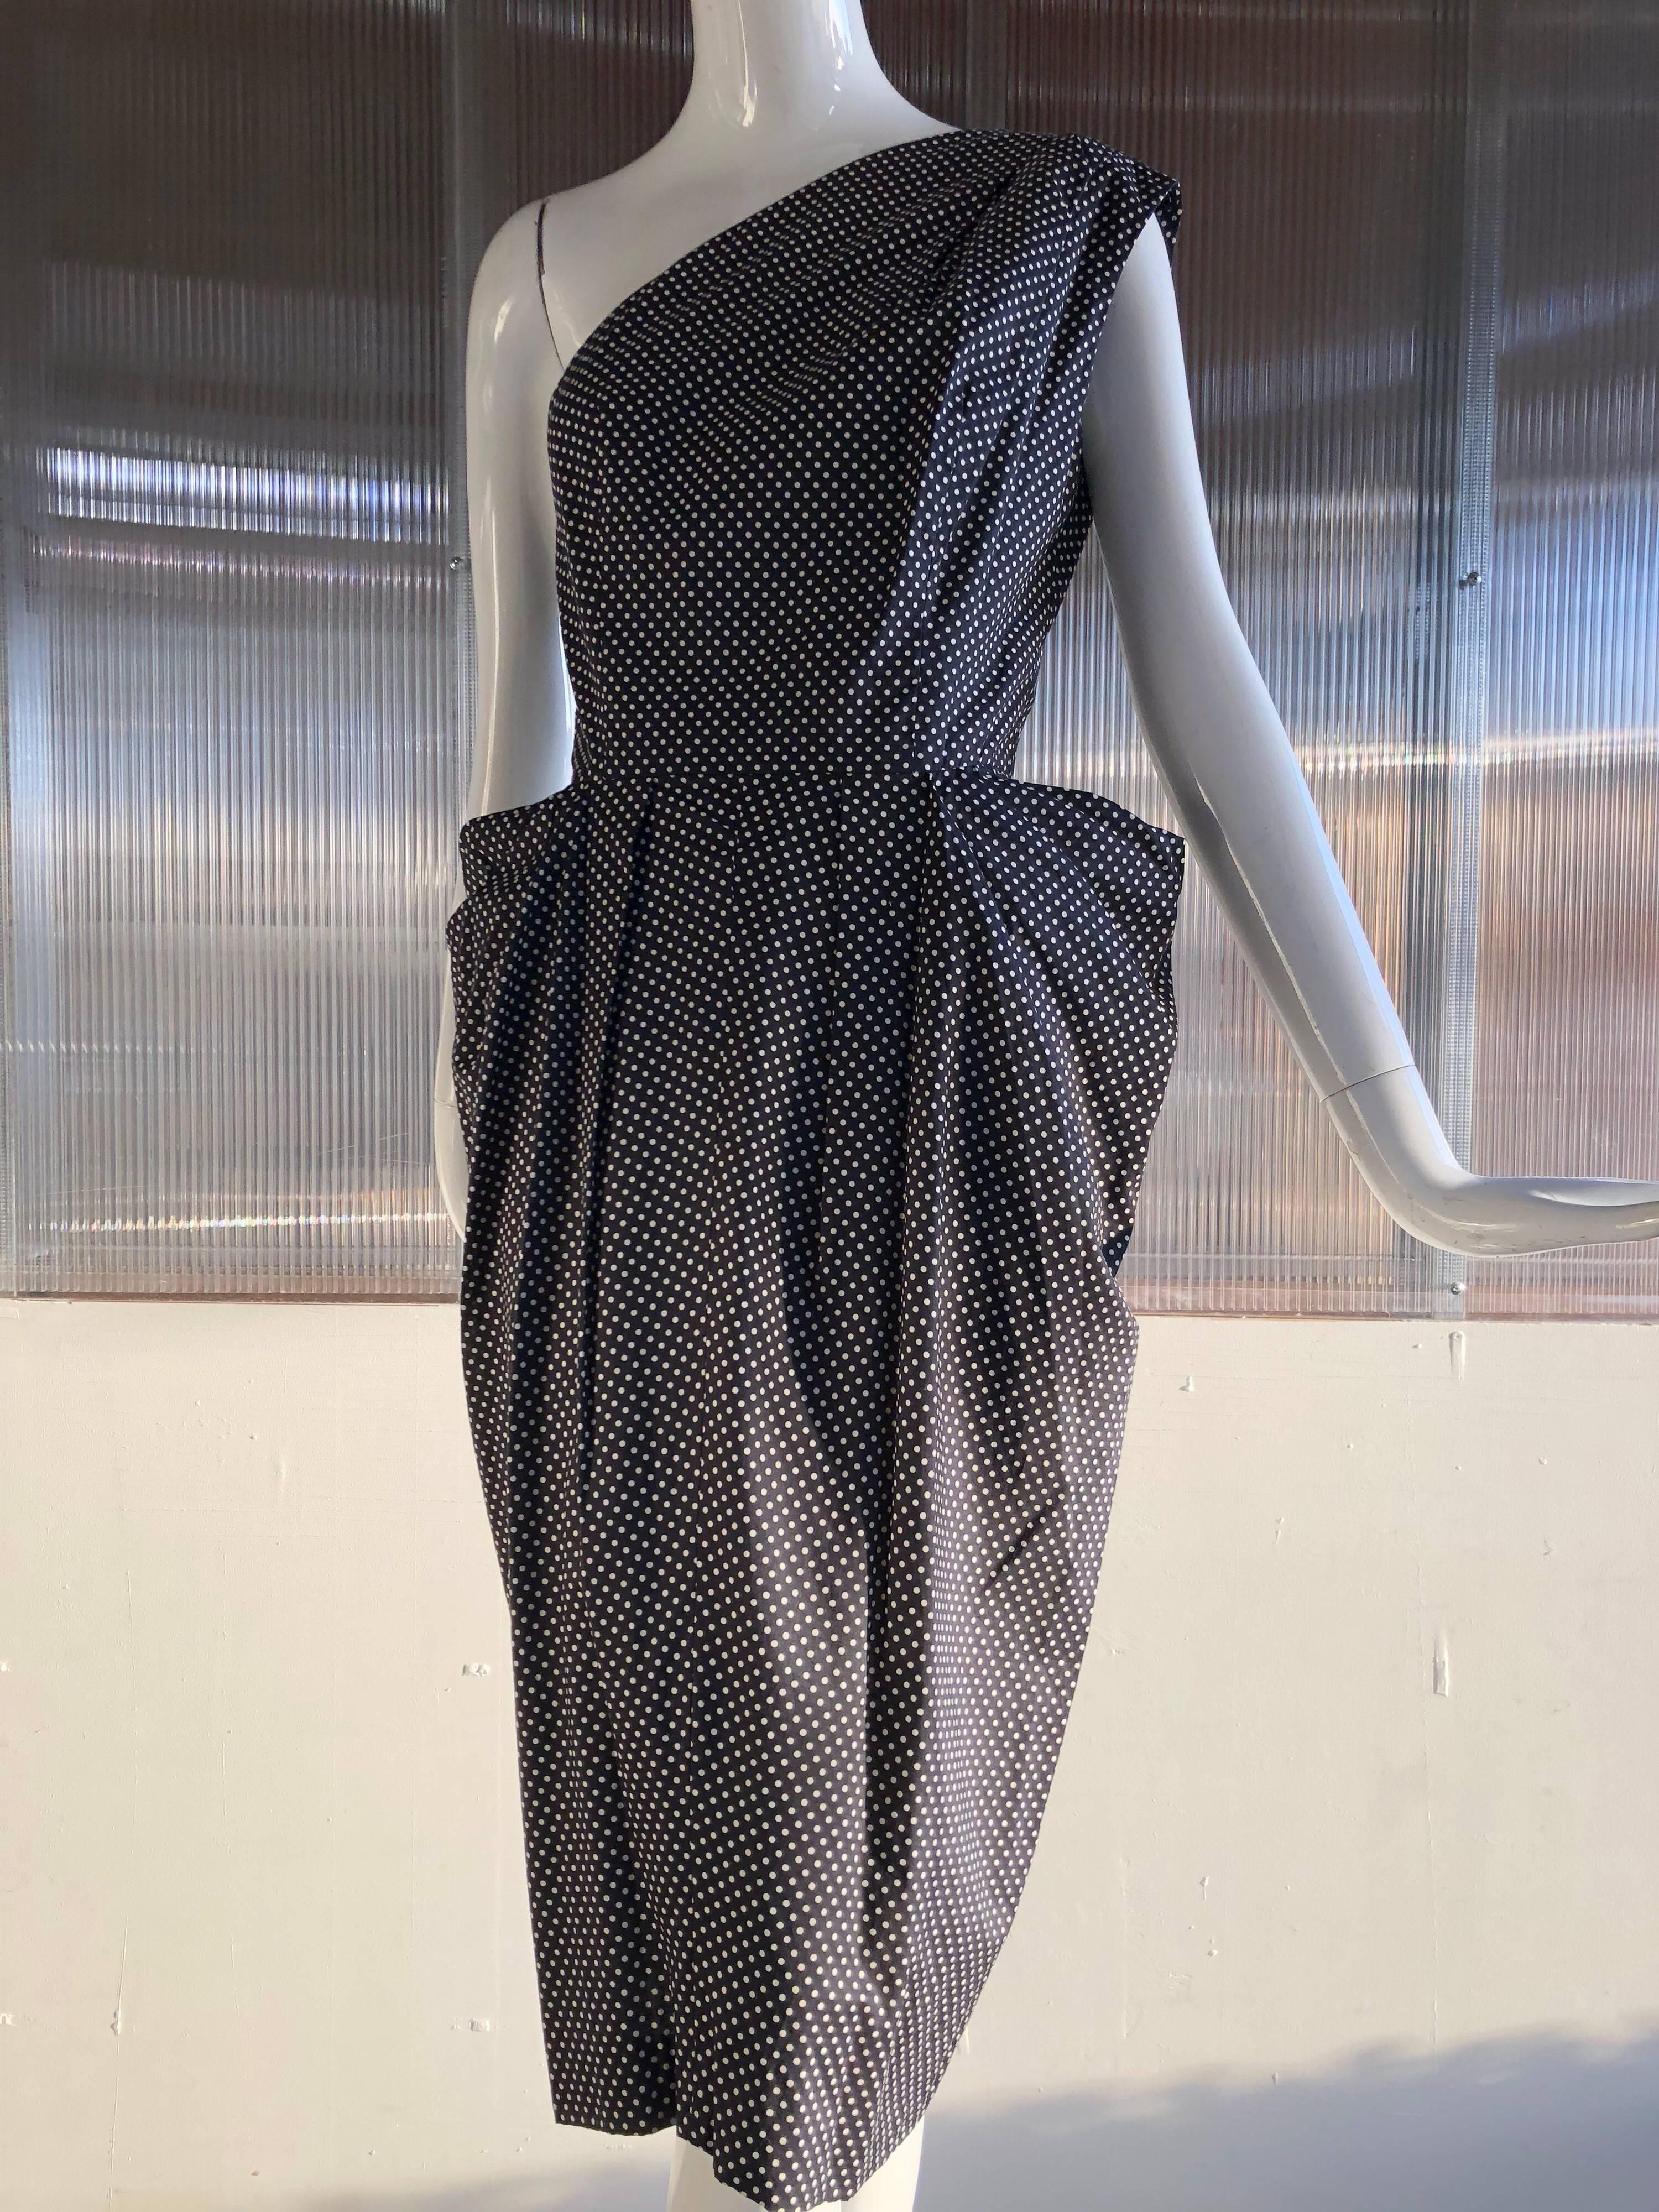 1980s Custom-Made Black and White Polka Dot One-Shoulder Dress W/ Hip Drapes 1